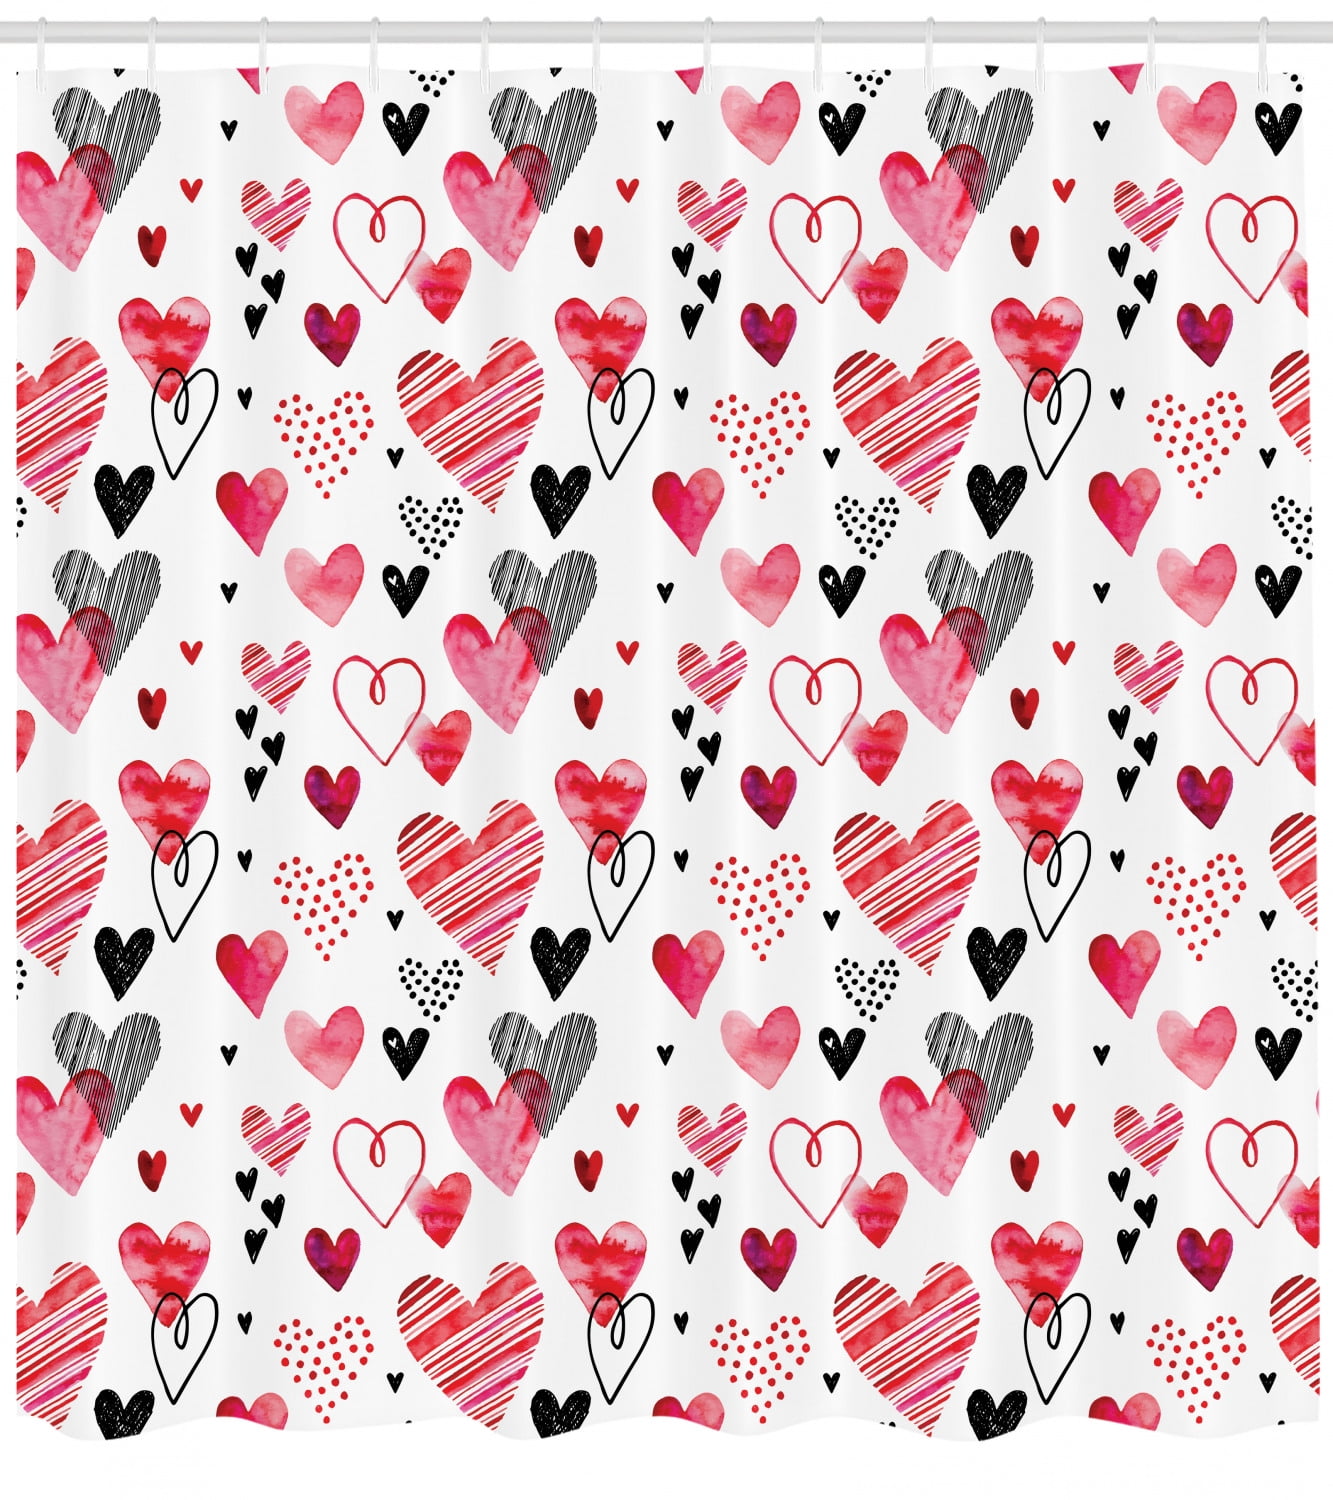 Shower Curtain Rainbow Color Heart Shapes Valentine's Day Design Bath Curtains